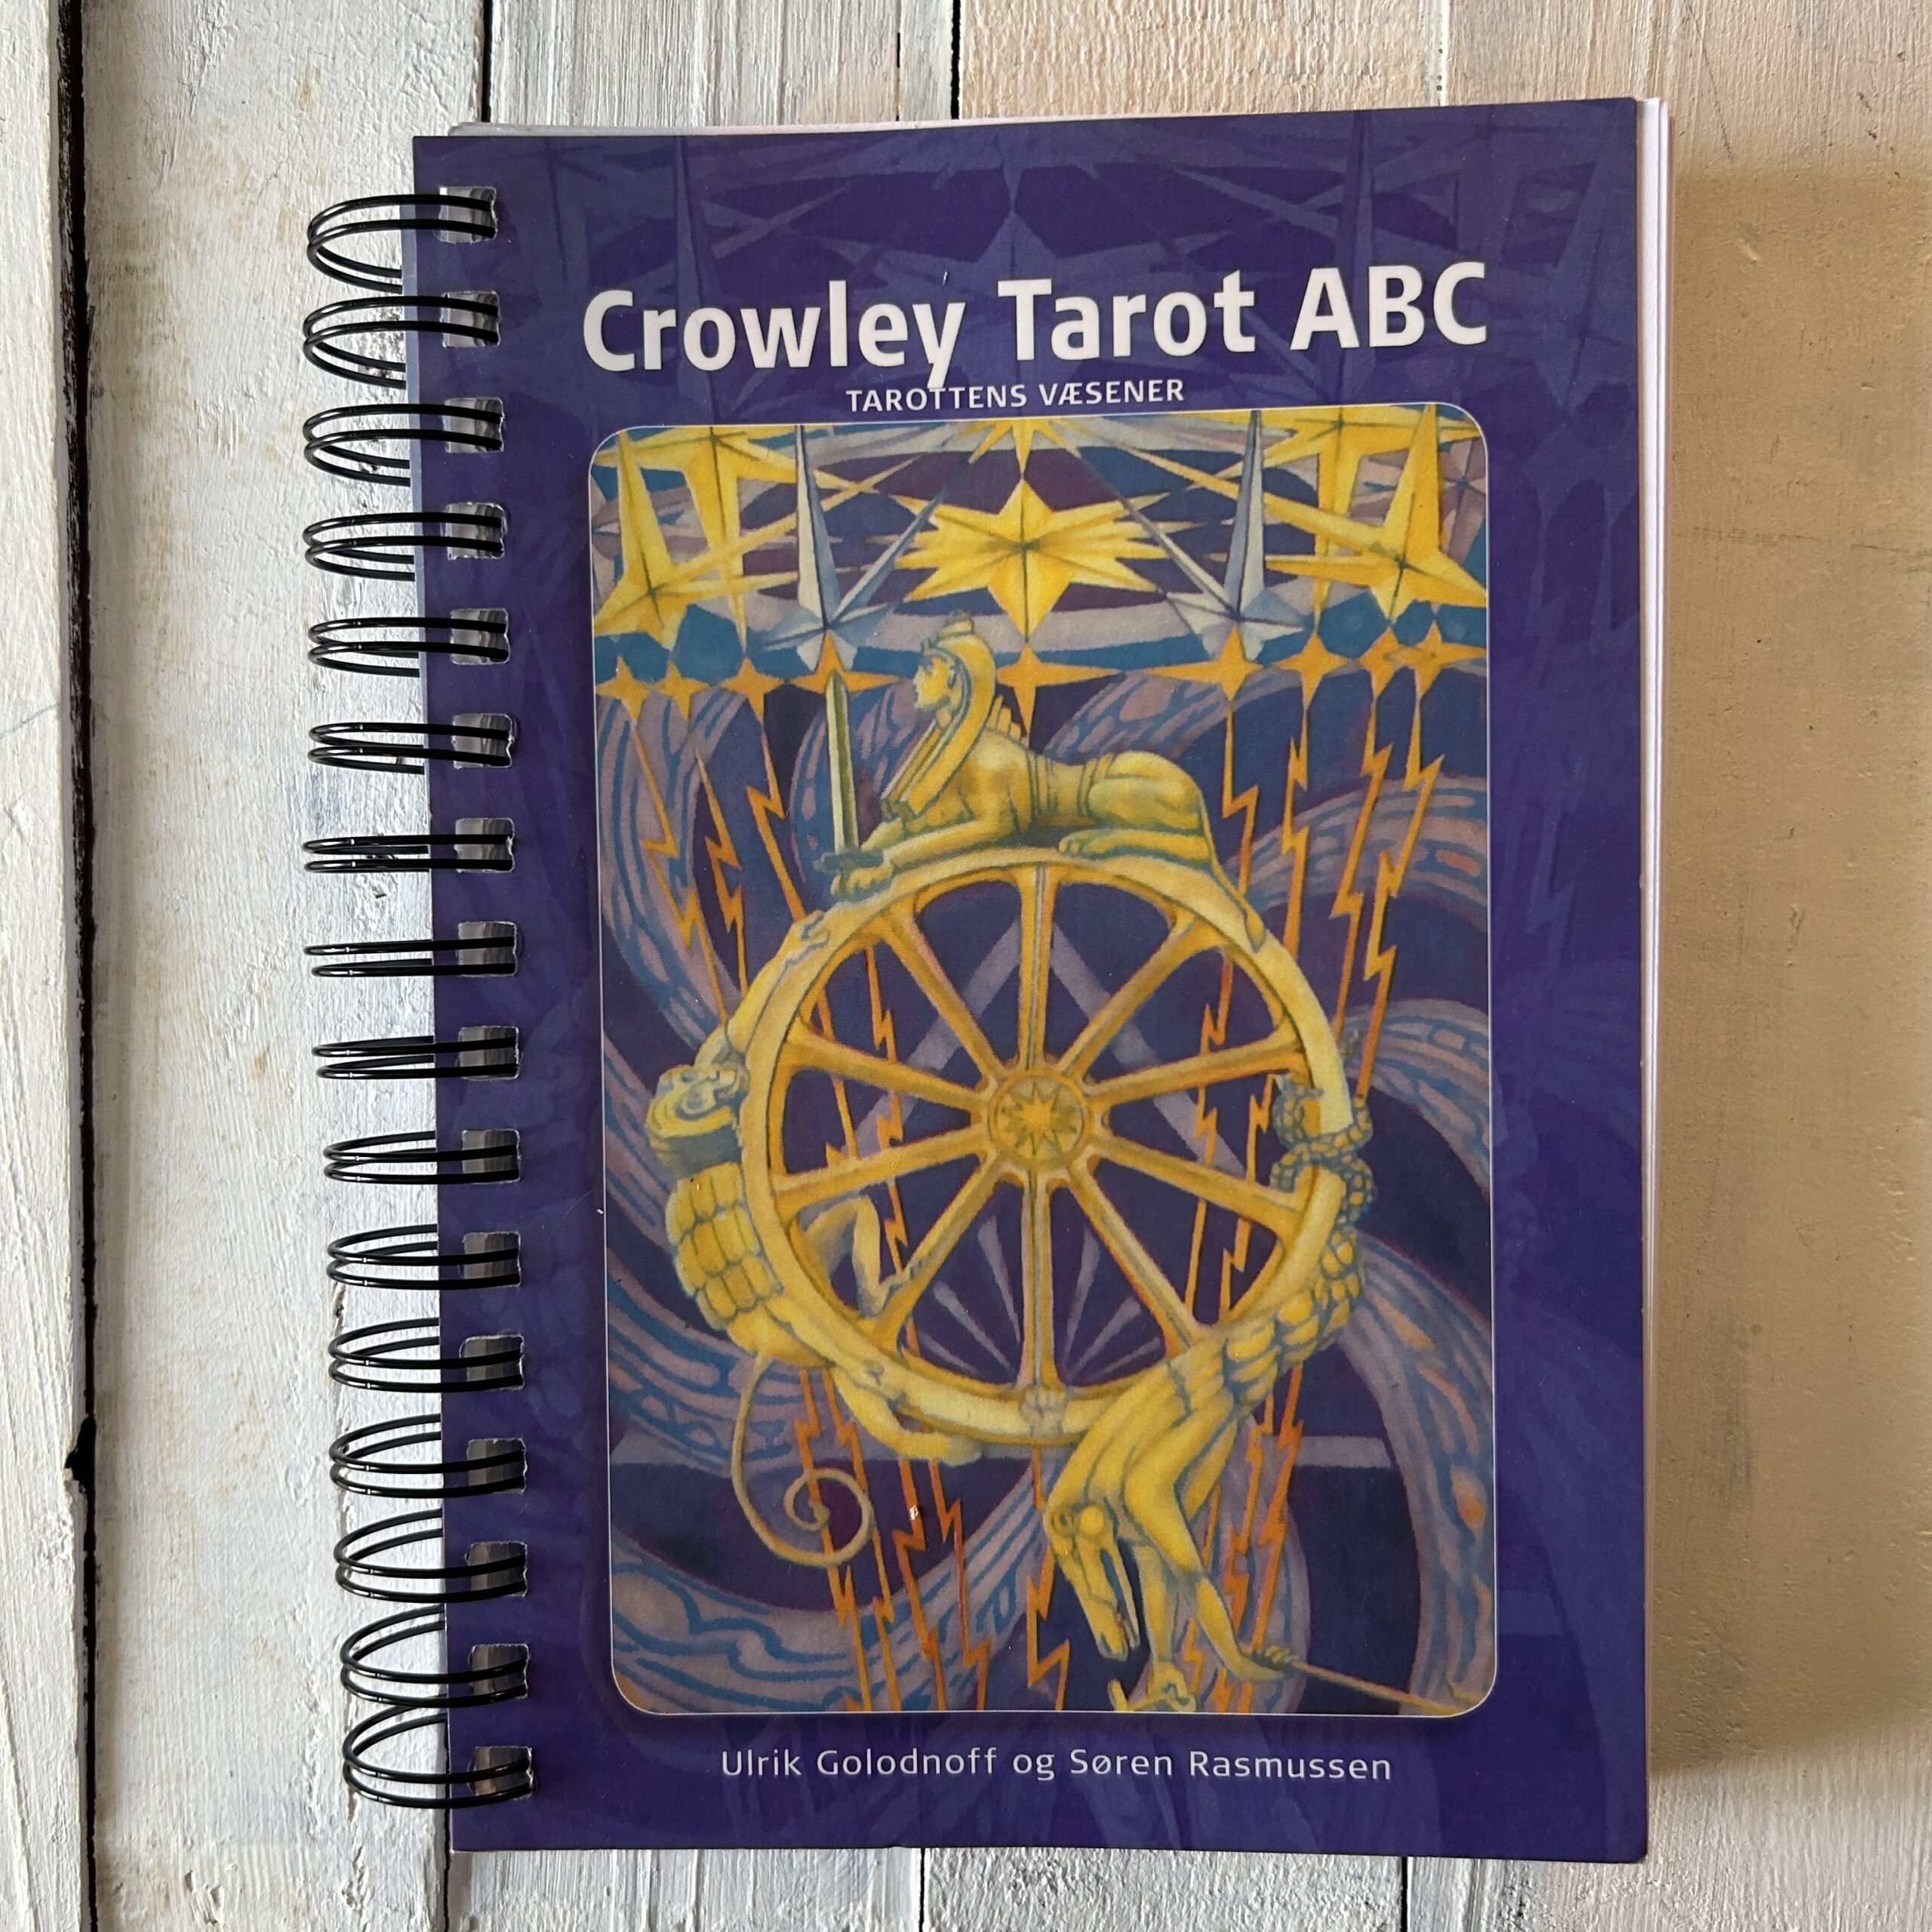 Afvist ankomme mærke Crowley Tarot ABC - Tarottens Væsener - 21008 | Englesans Krystalbutik